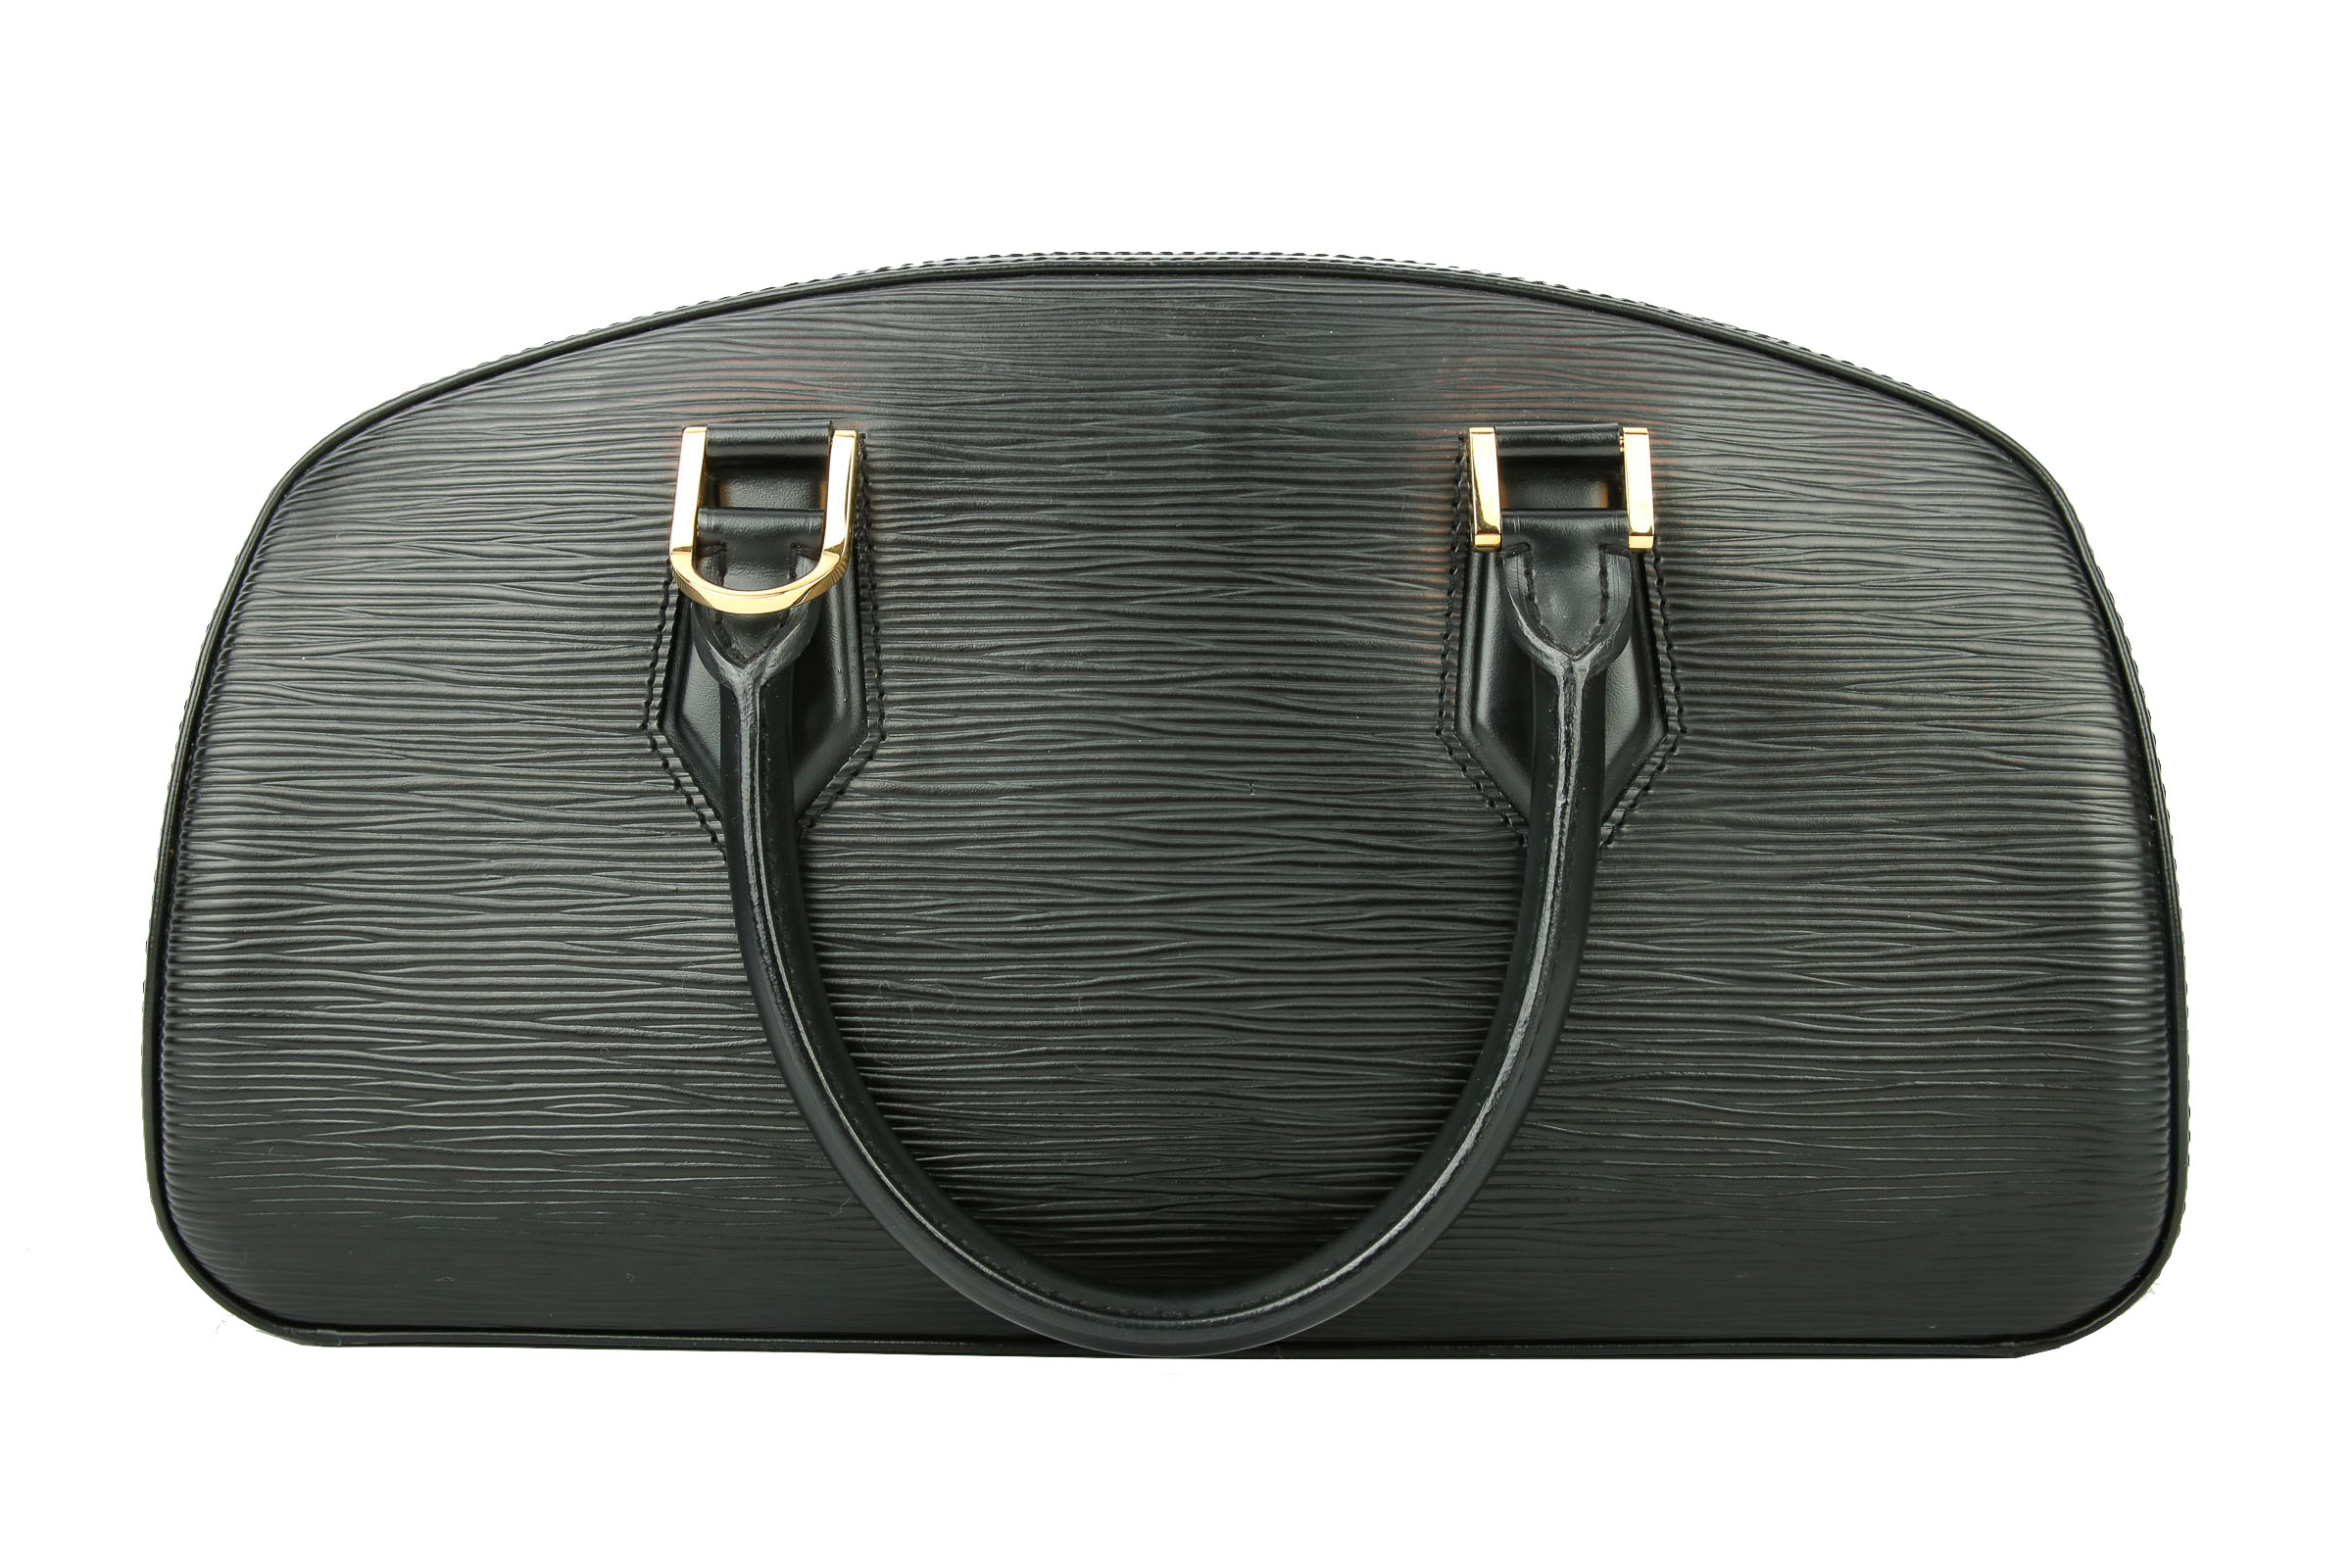 Louis Vuitton Handtasche Epi Leder schwarz | www.bagssaleusa.com